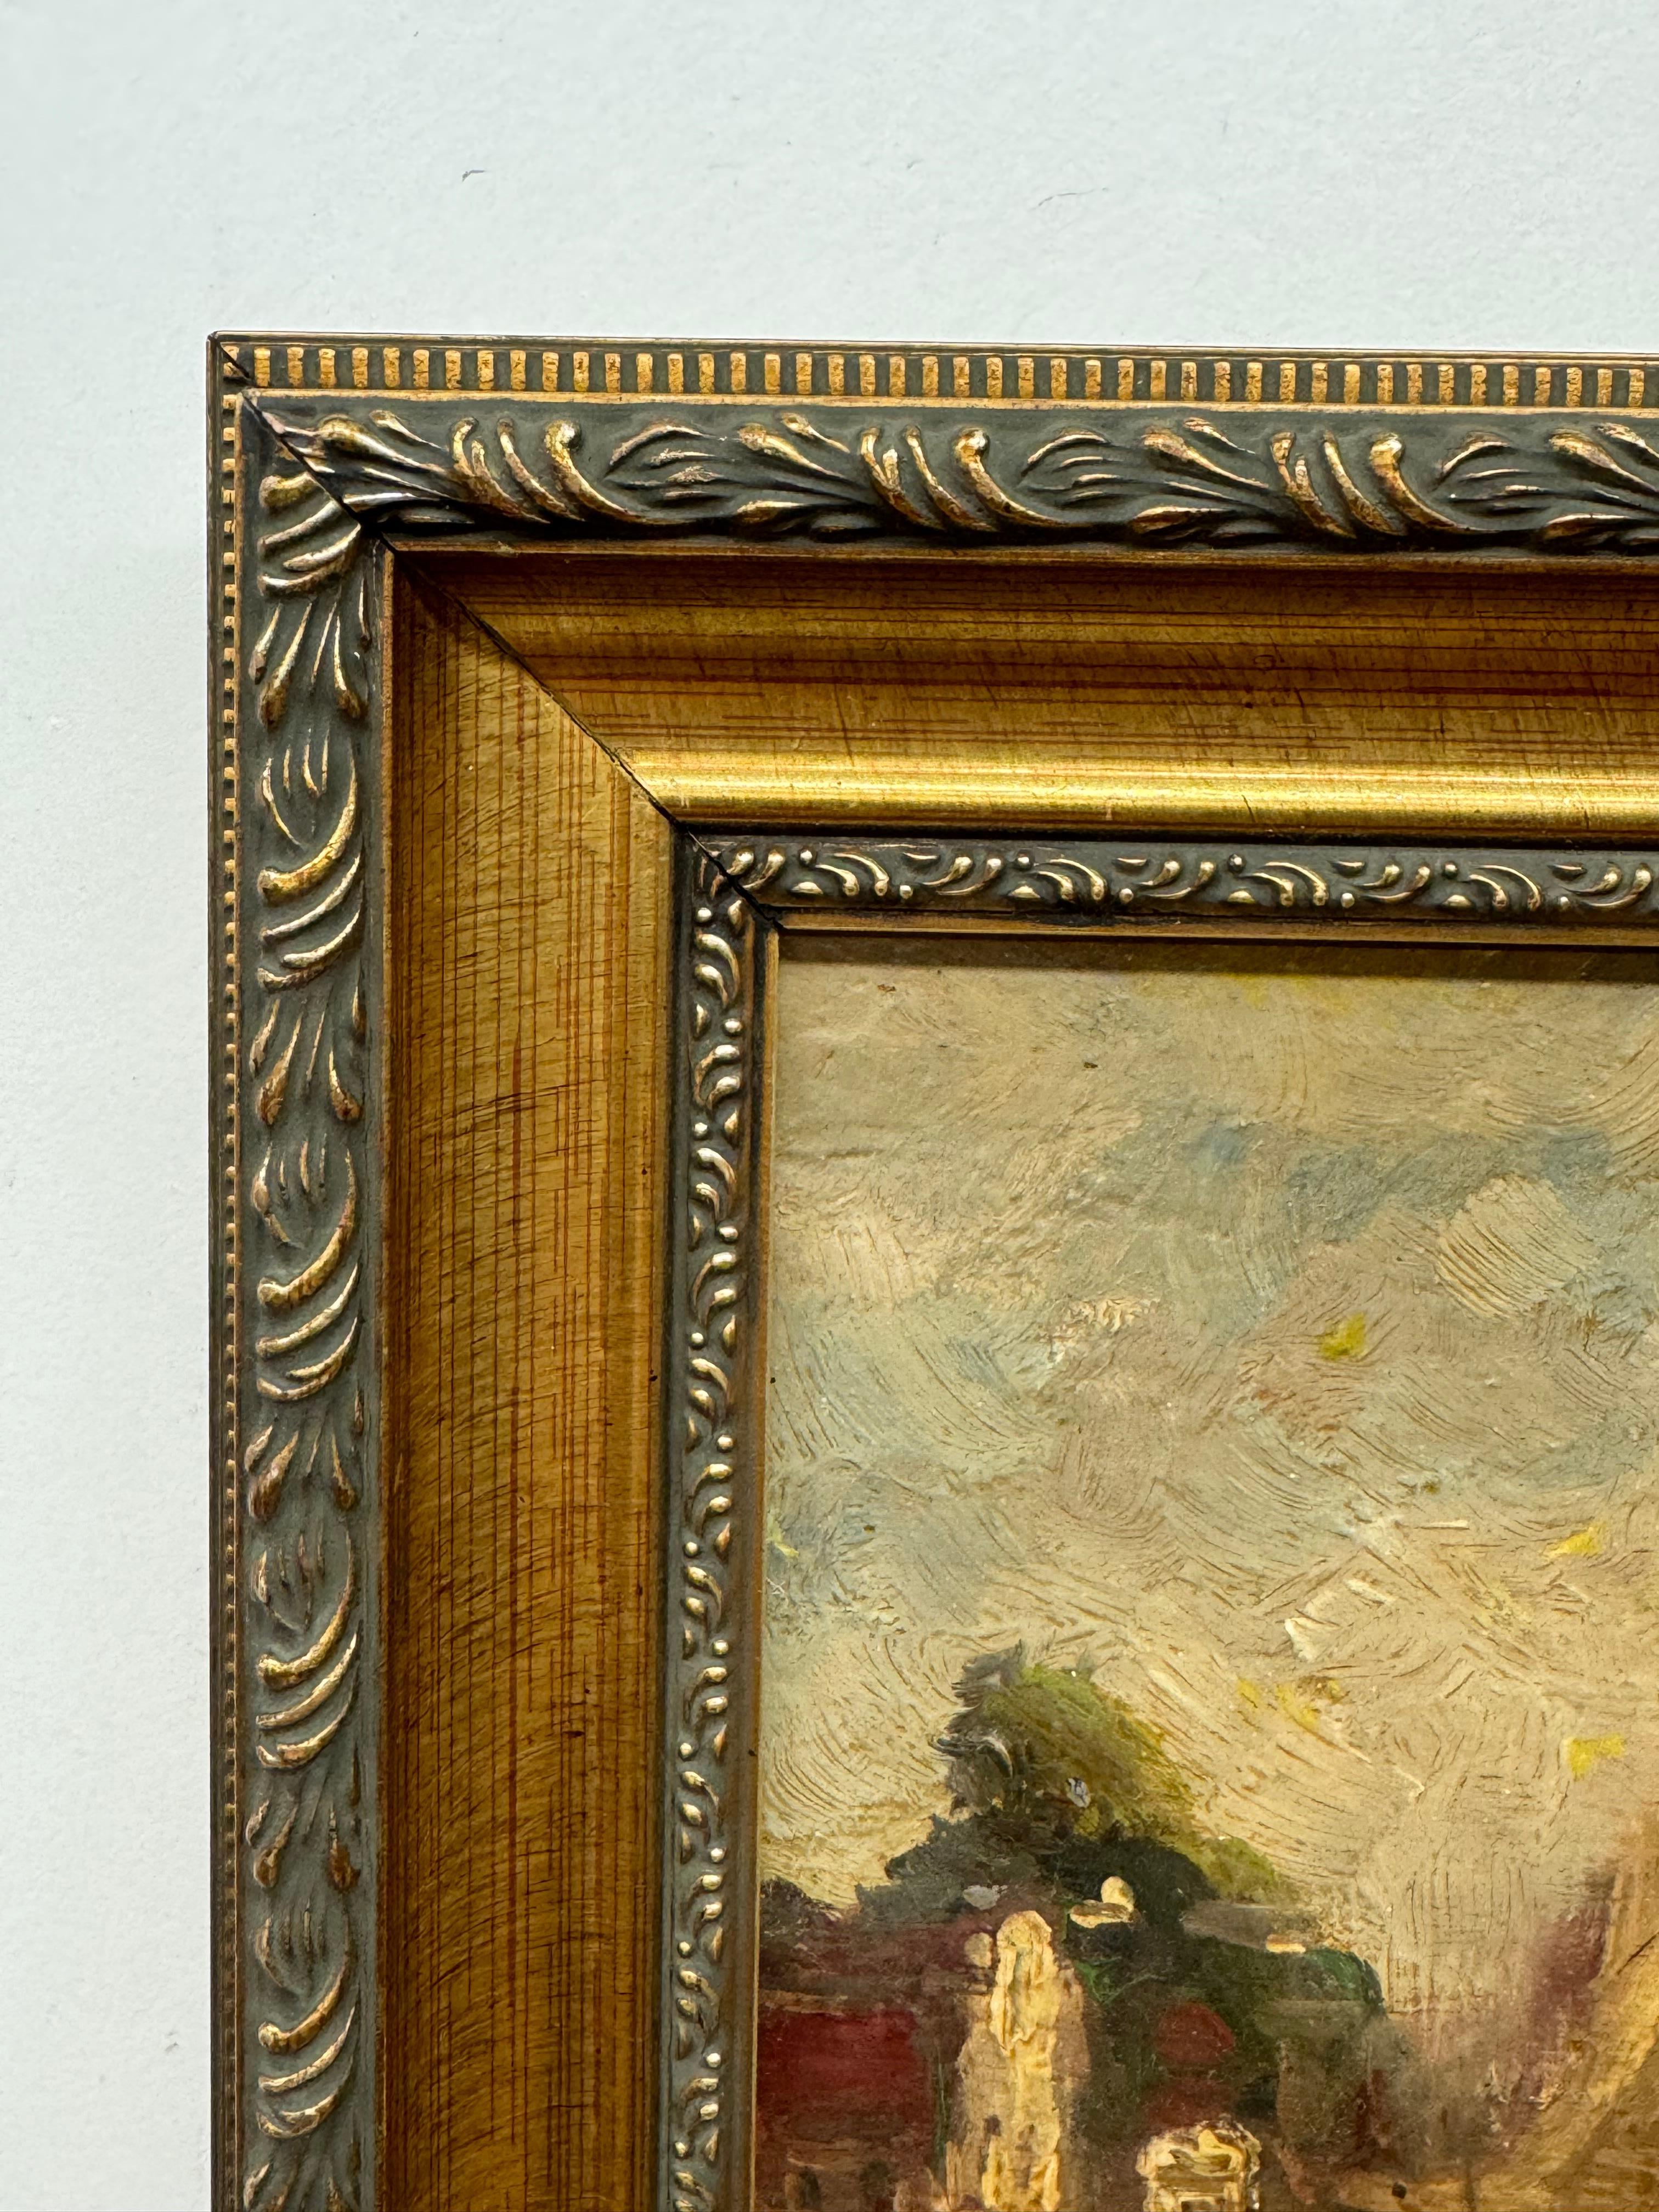 Louis van der Pol (1896-1982) Dutch Harbor Scene by well known listed artist

Oil on wood panel 

8 x 11.75 unframed, 11.75 x 15.25 framed
